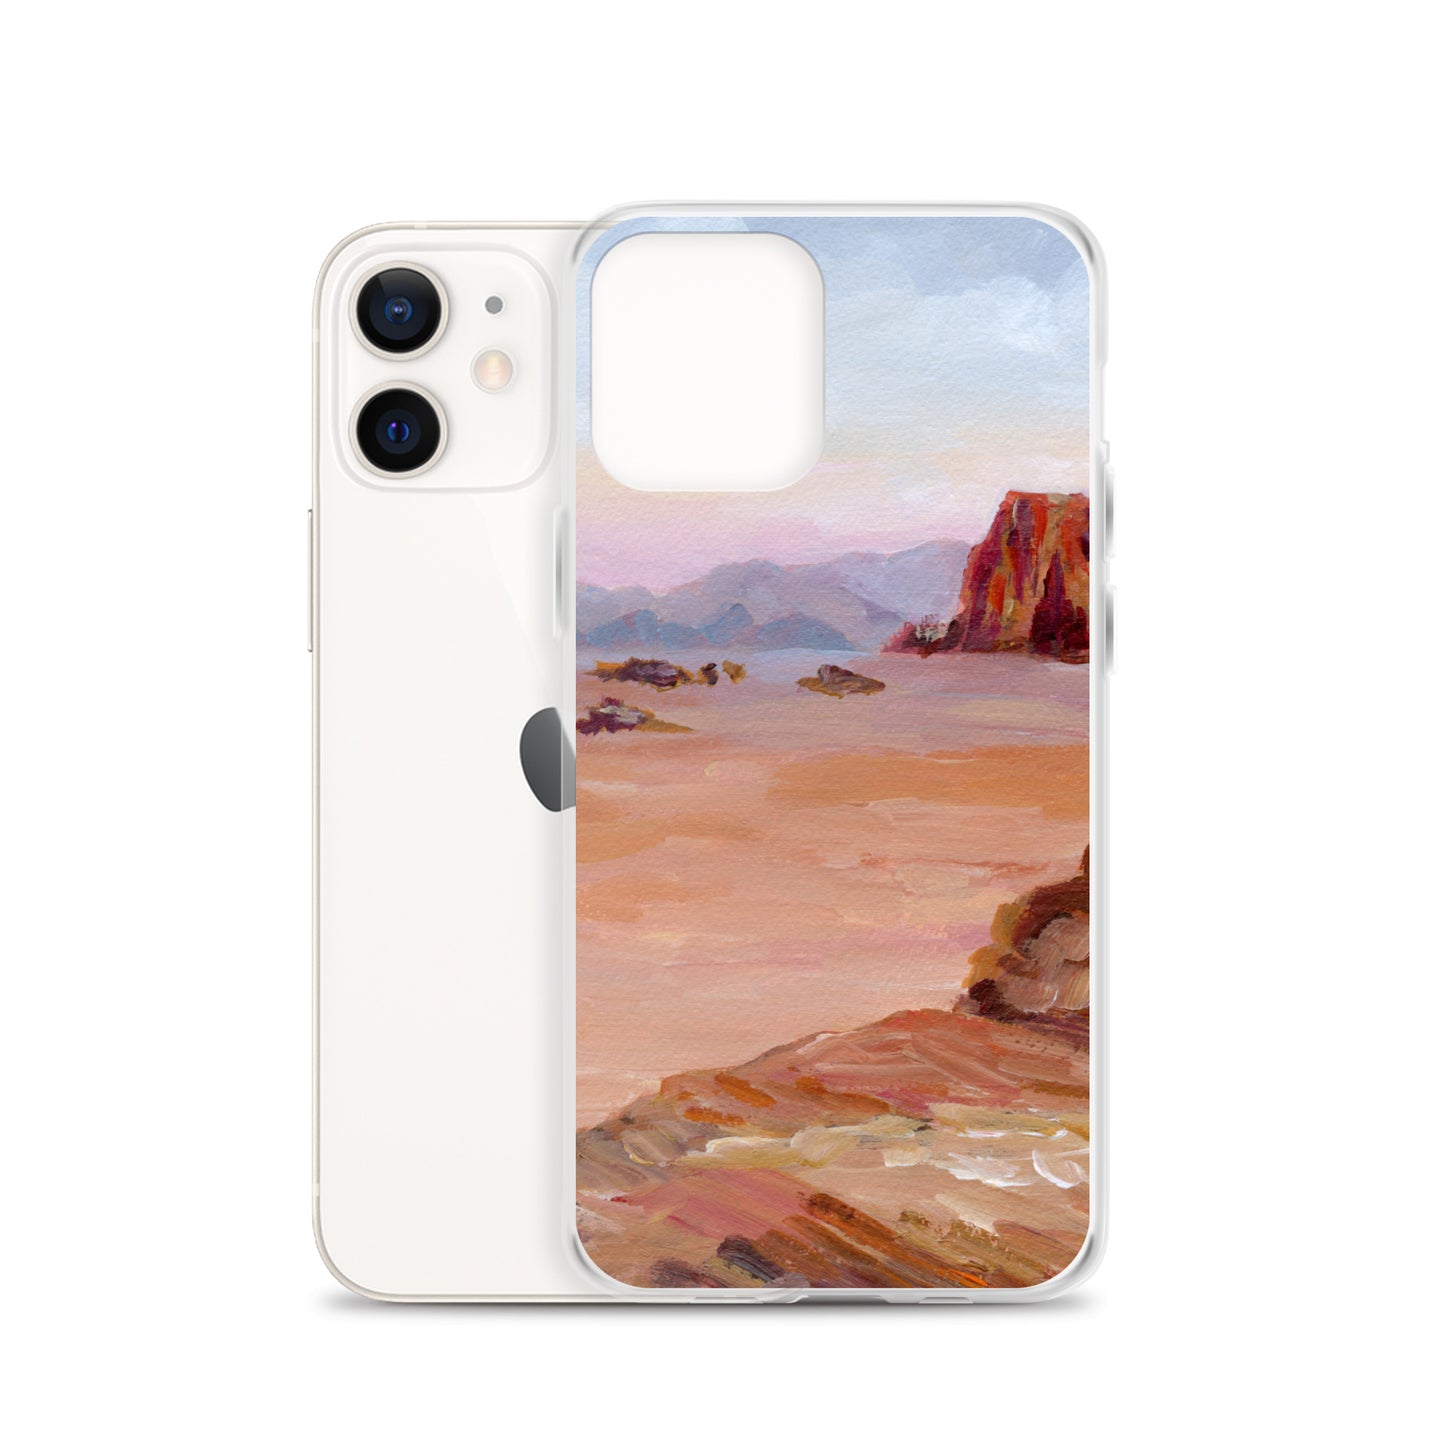 Desert Landscape Clear Case for iPhone®